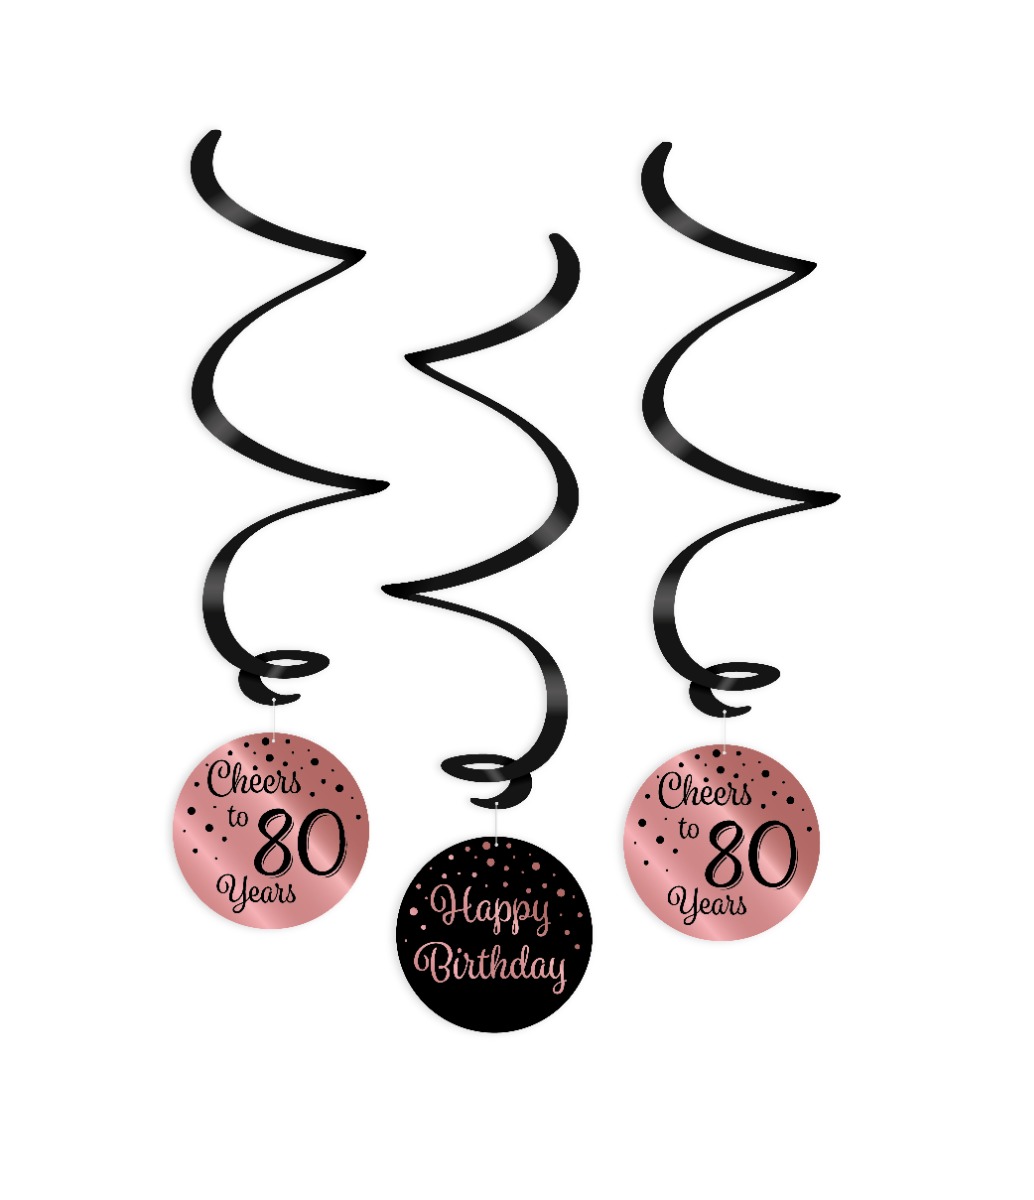 Paperdreams Swirl Decorations Roze/zwart - 80